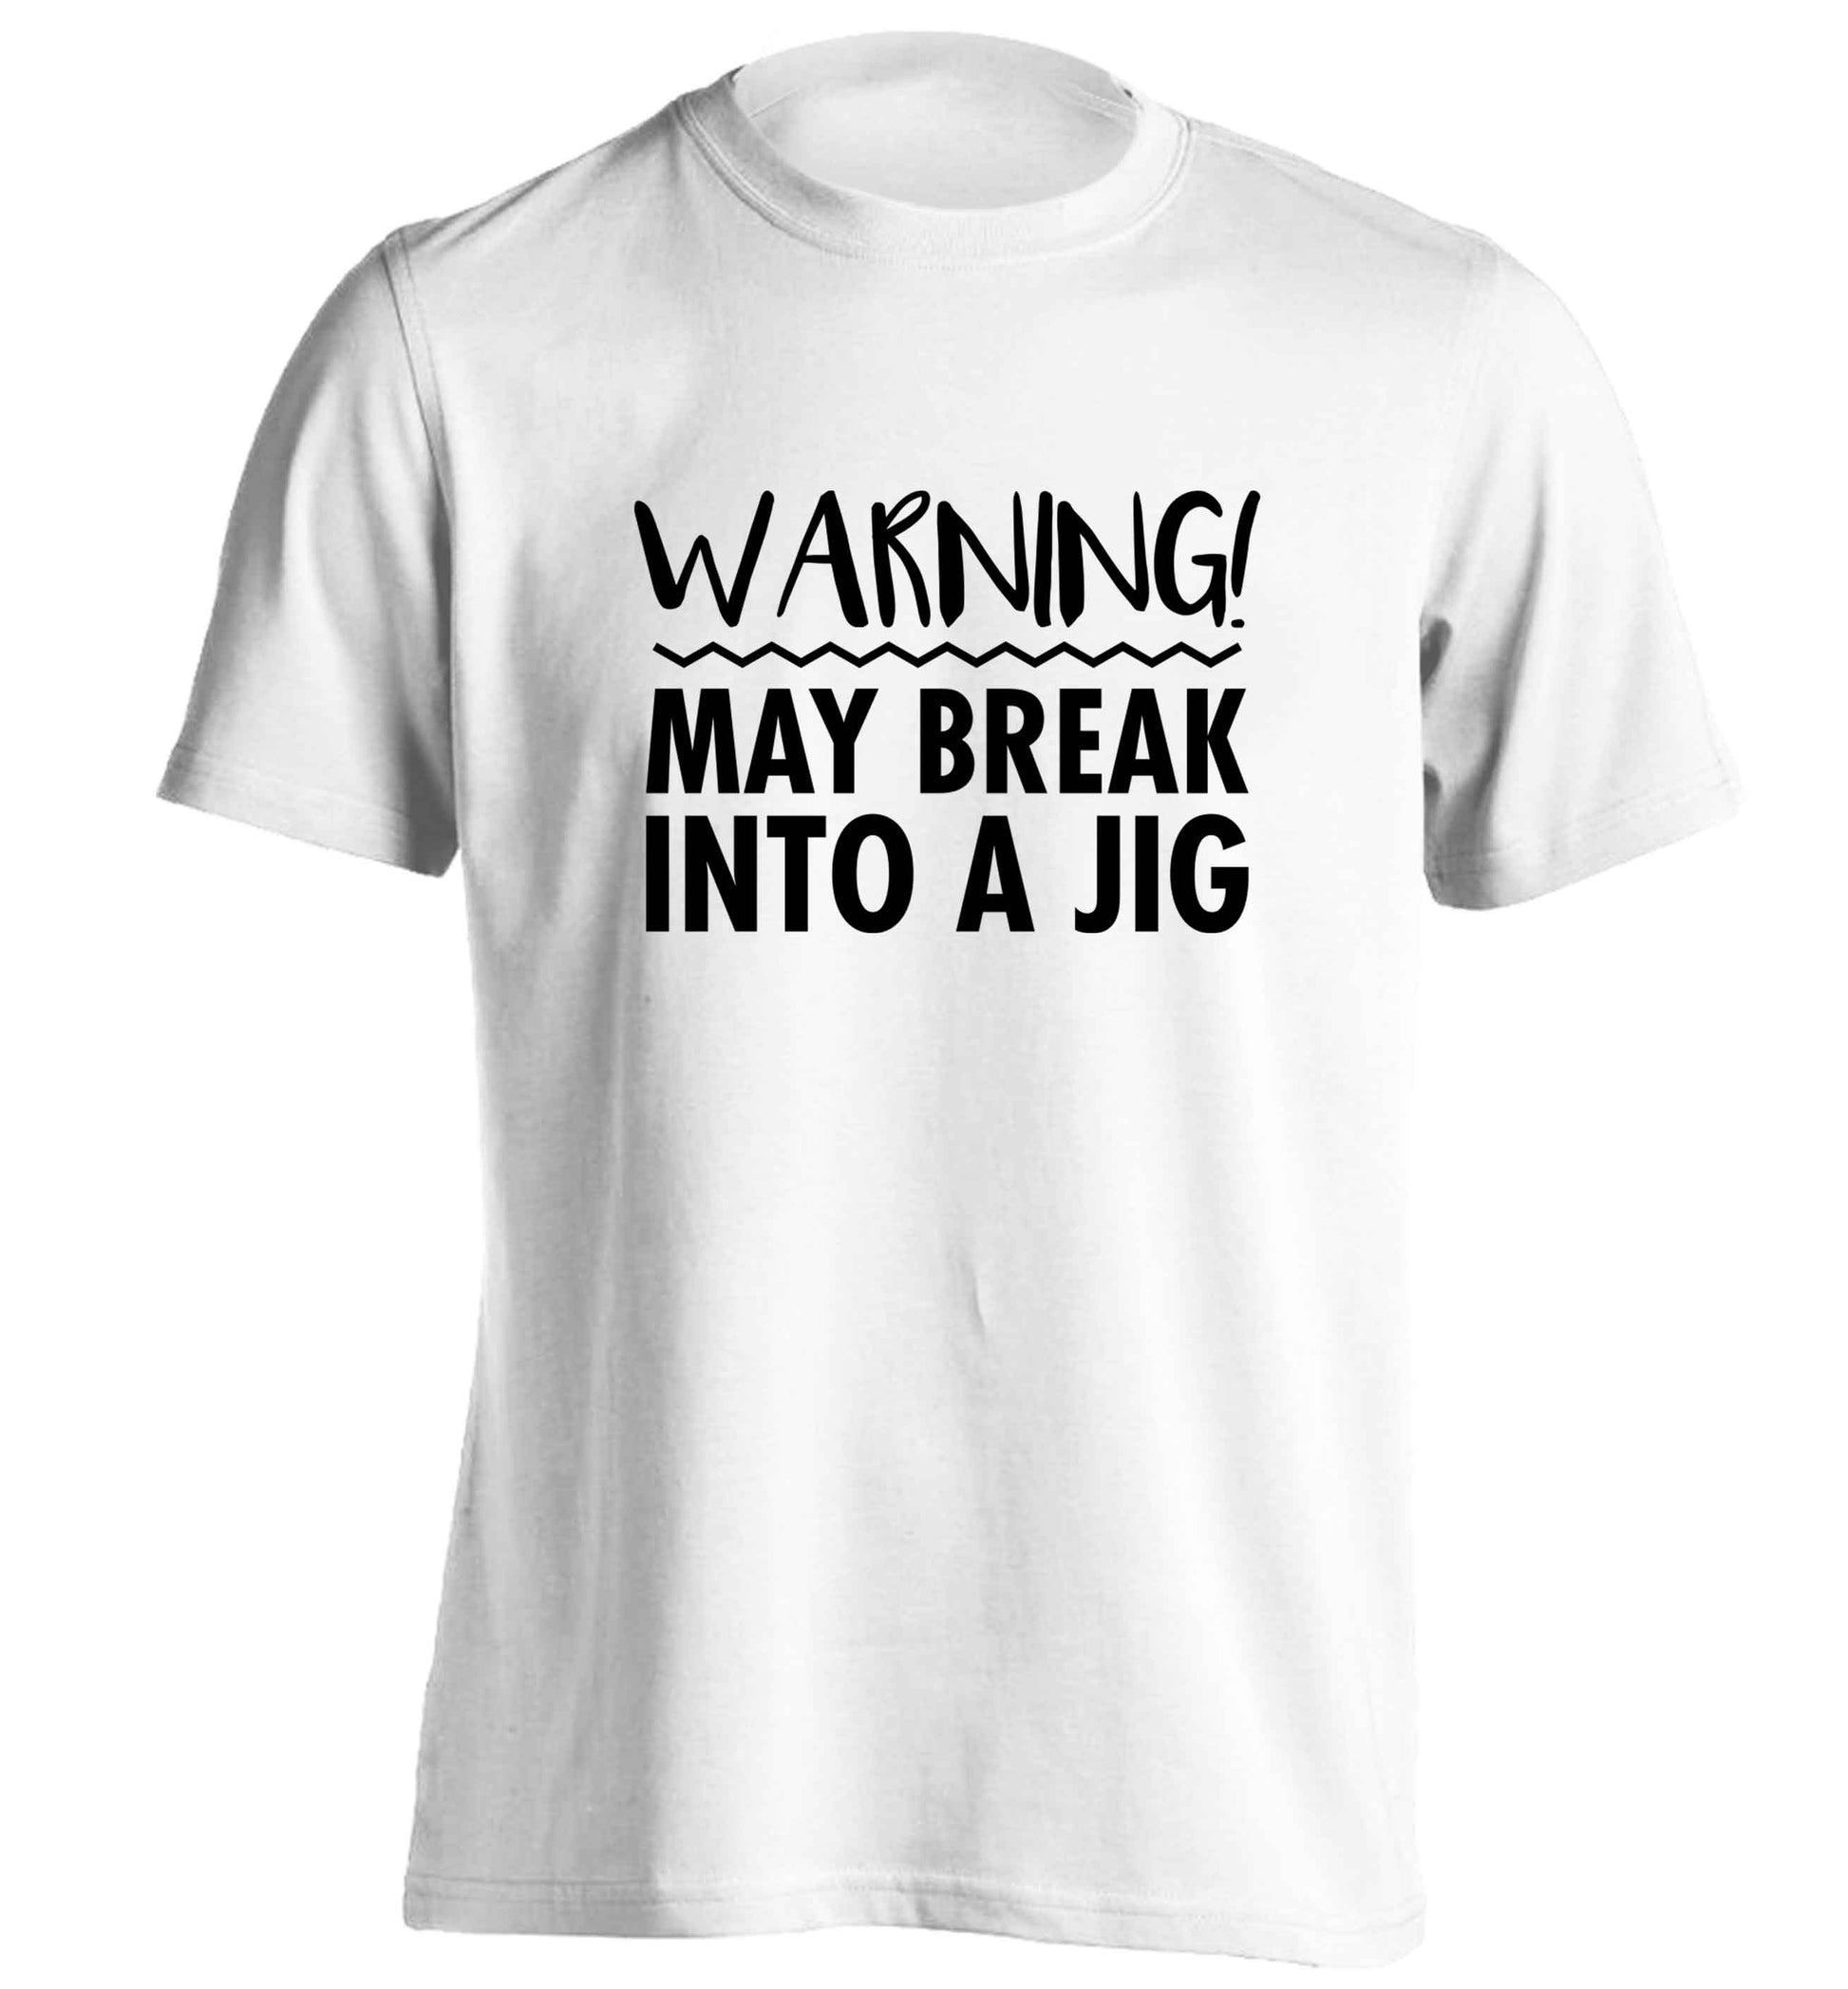 Warning may break into a jig adults unisex white Tshirt 2XL